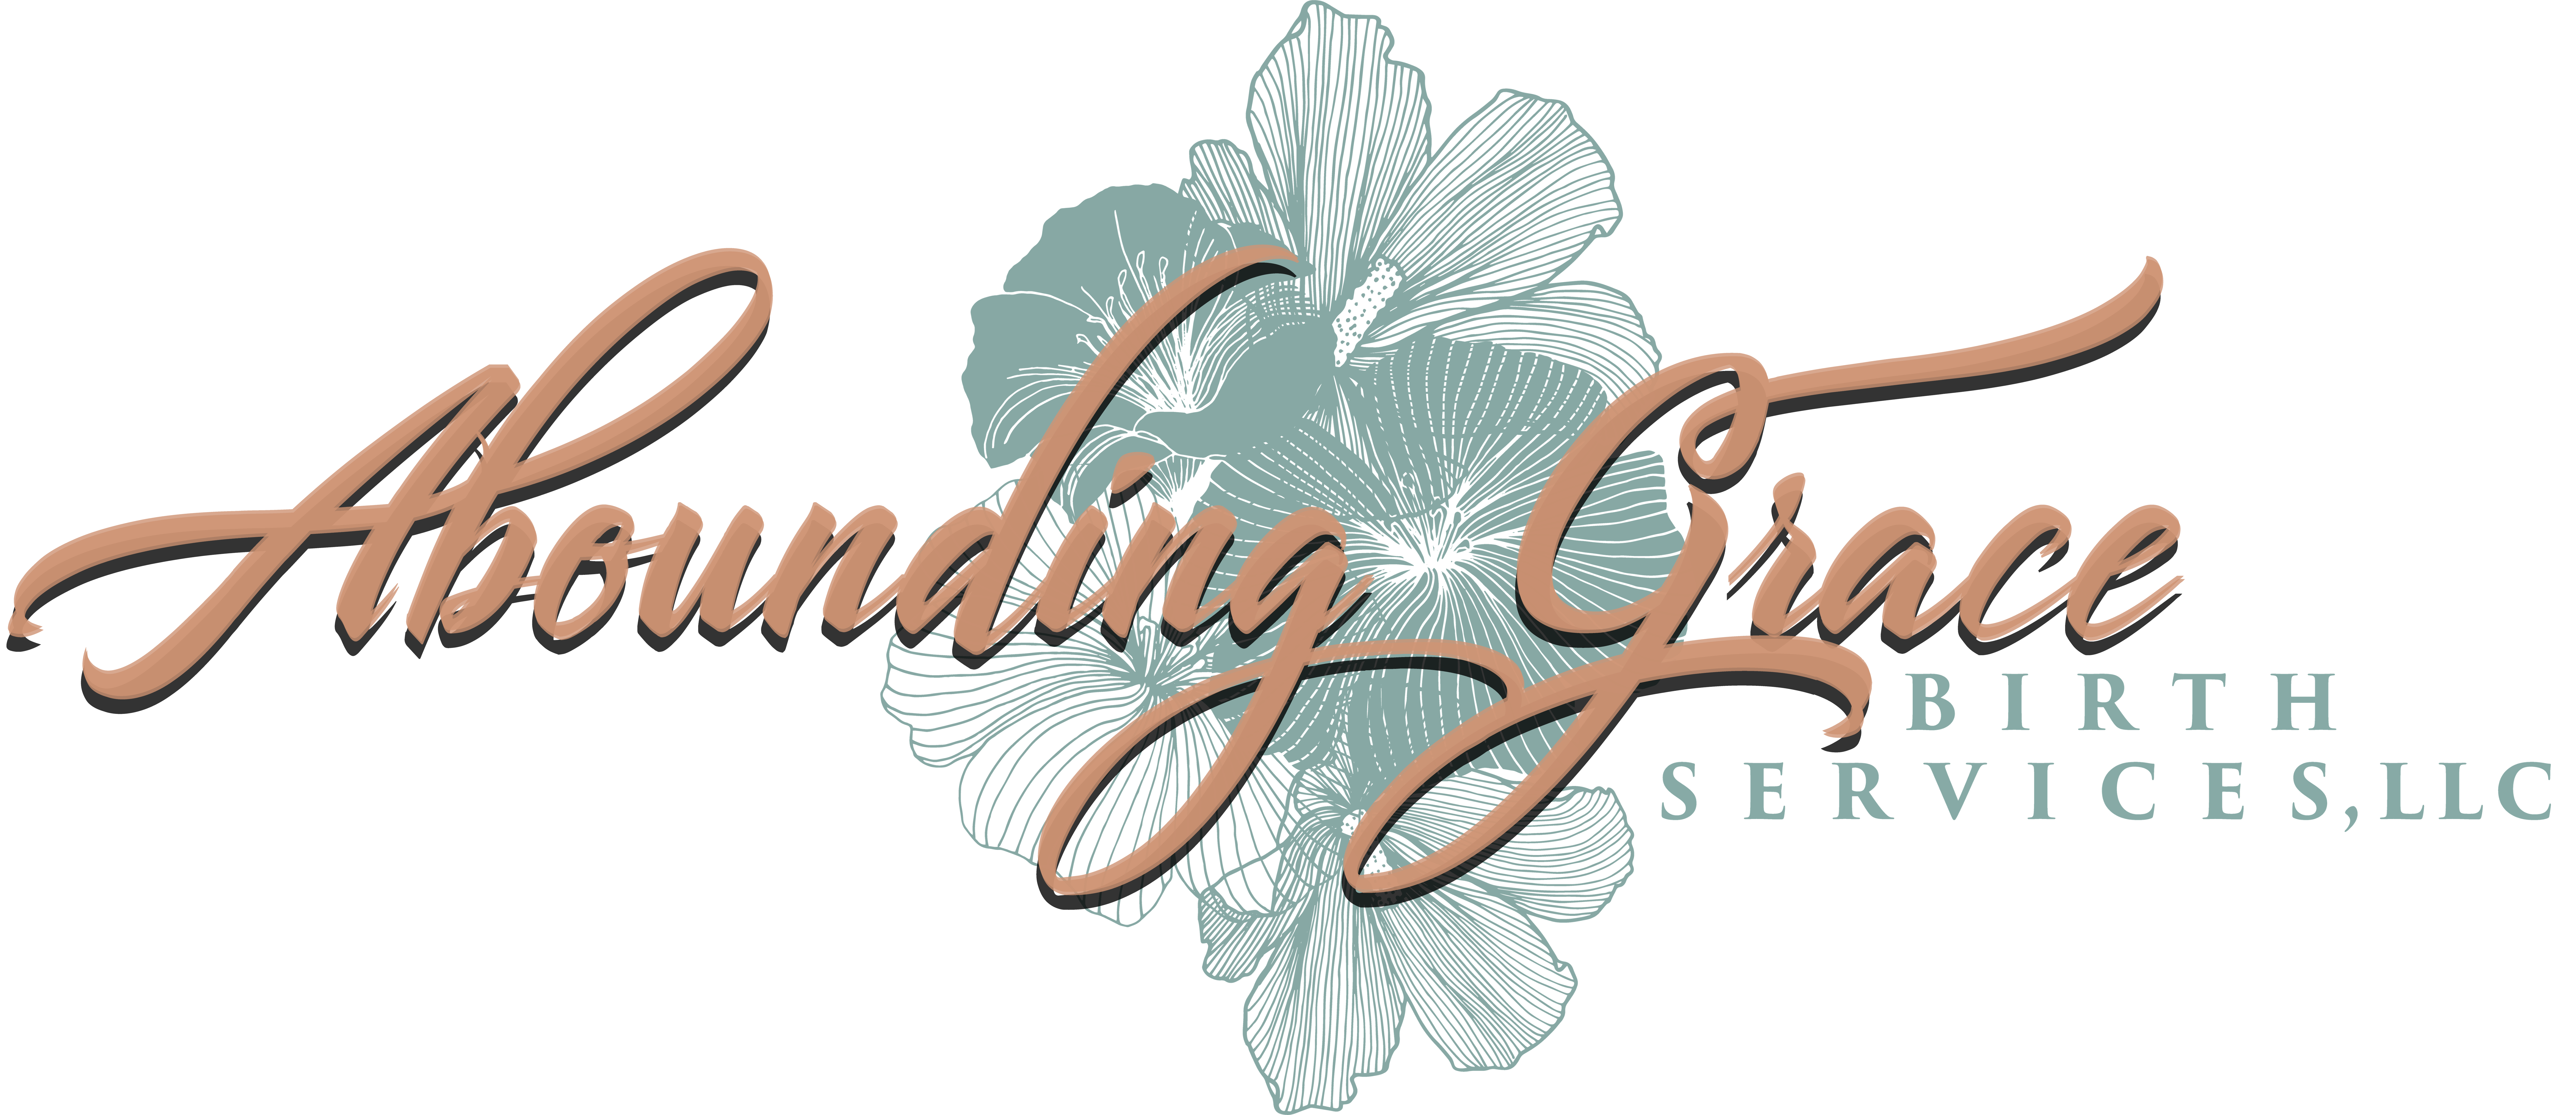 Abounding Grace Birth Services Header Logo